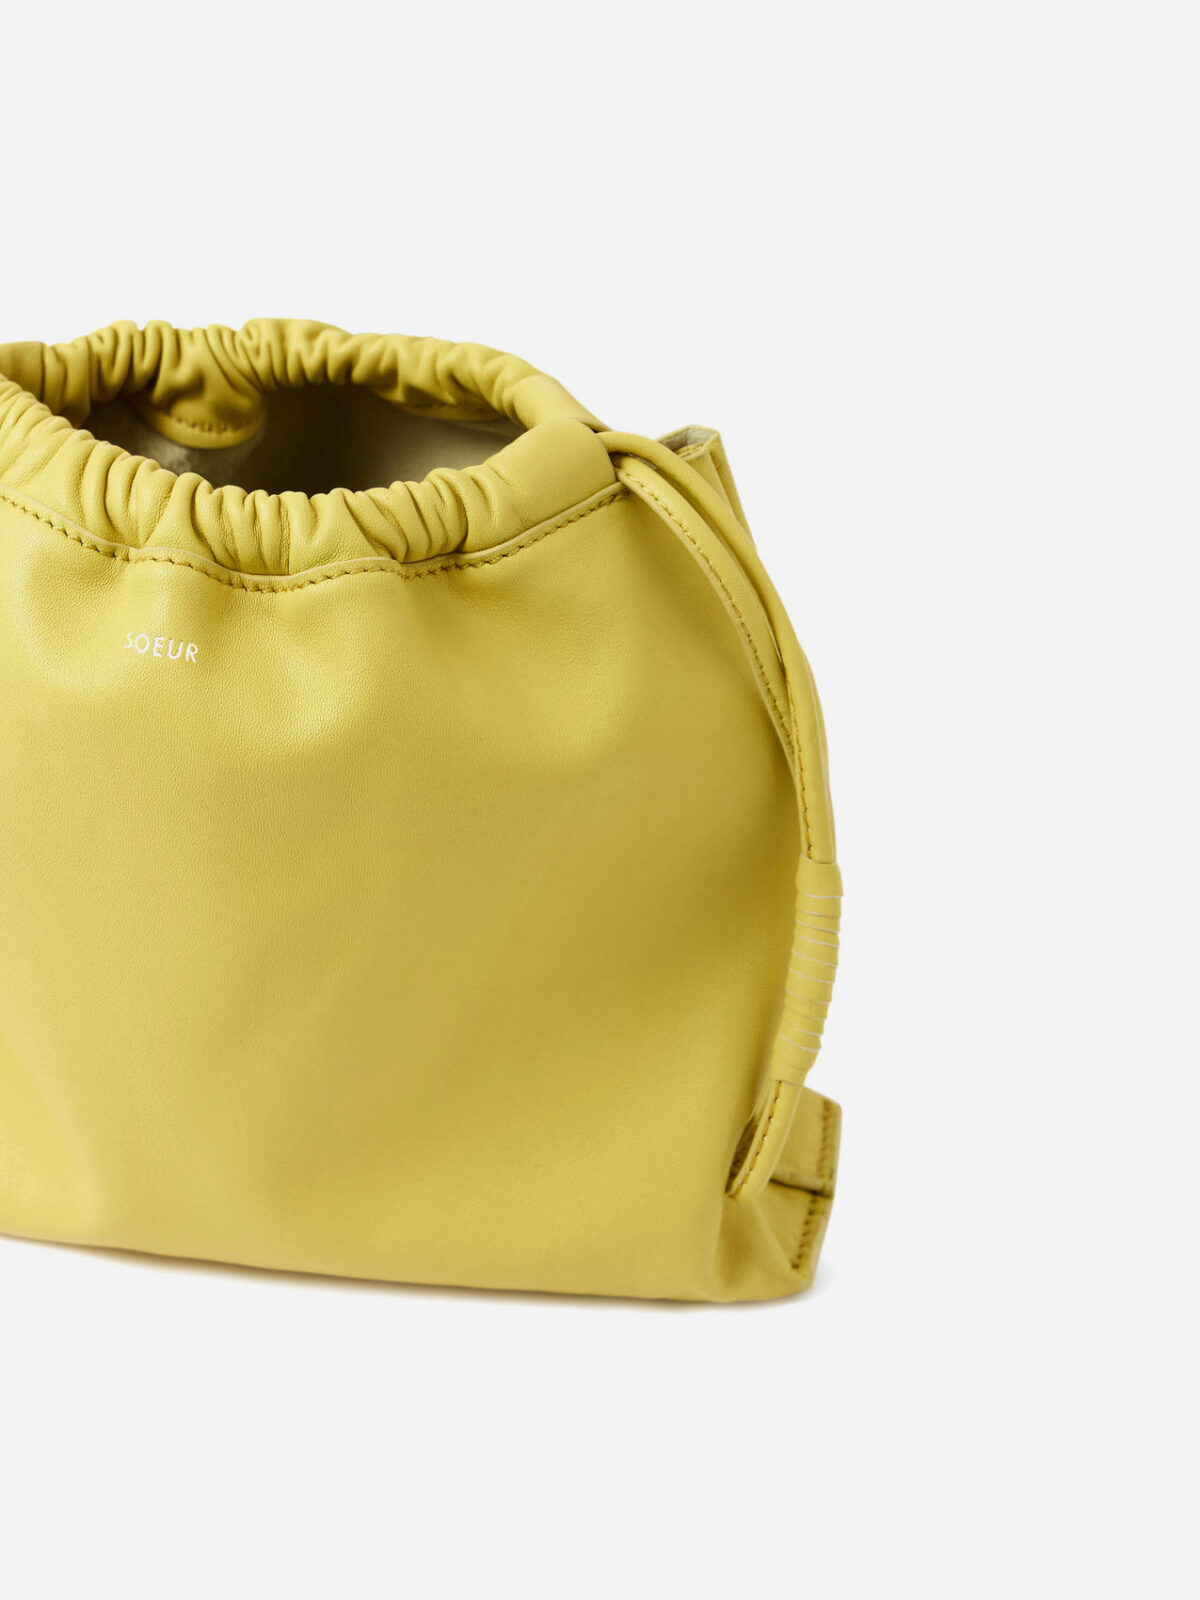 SEM1433SUZETTE24SJAU23-leather-yellow-purse-bag-gathered-soeur-matchboxathens